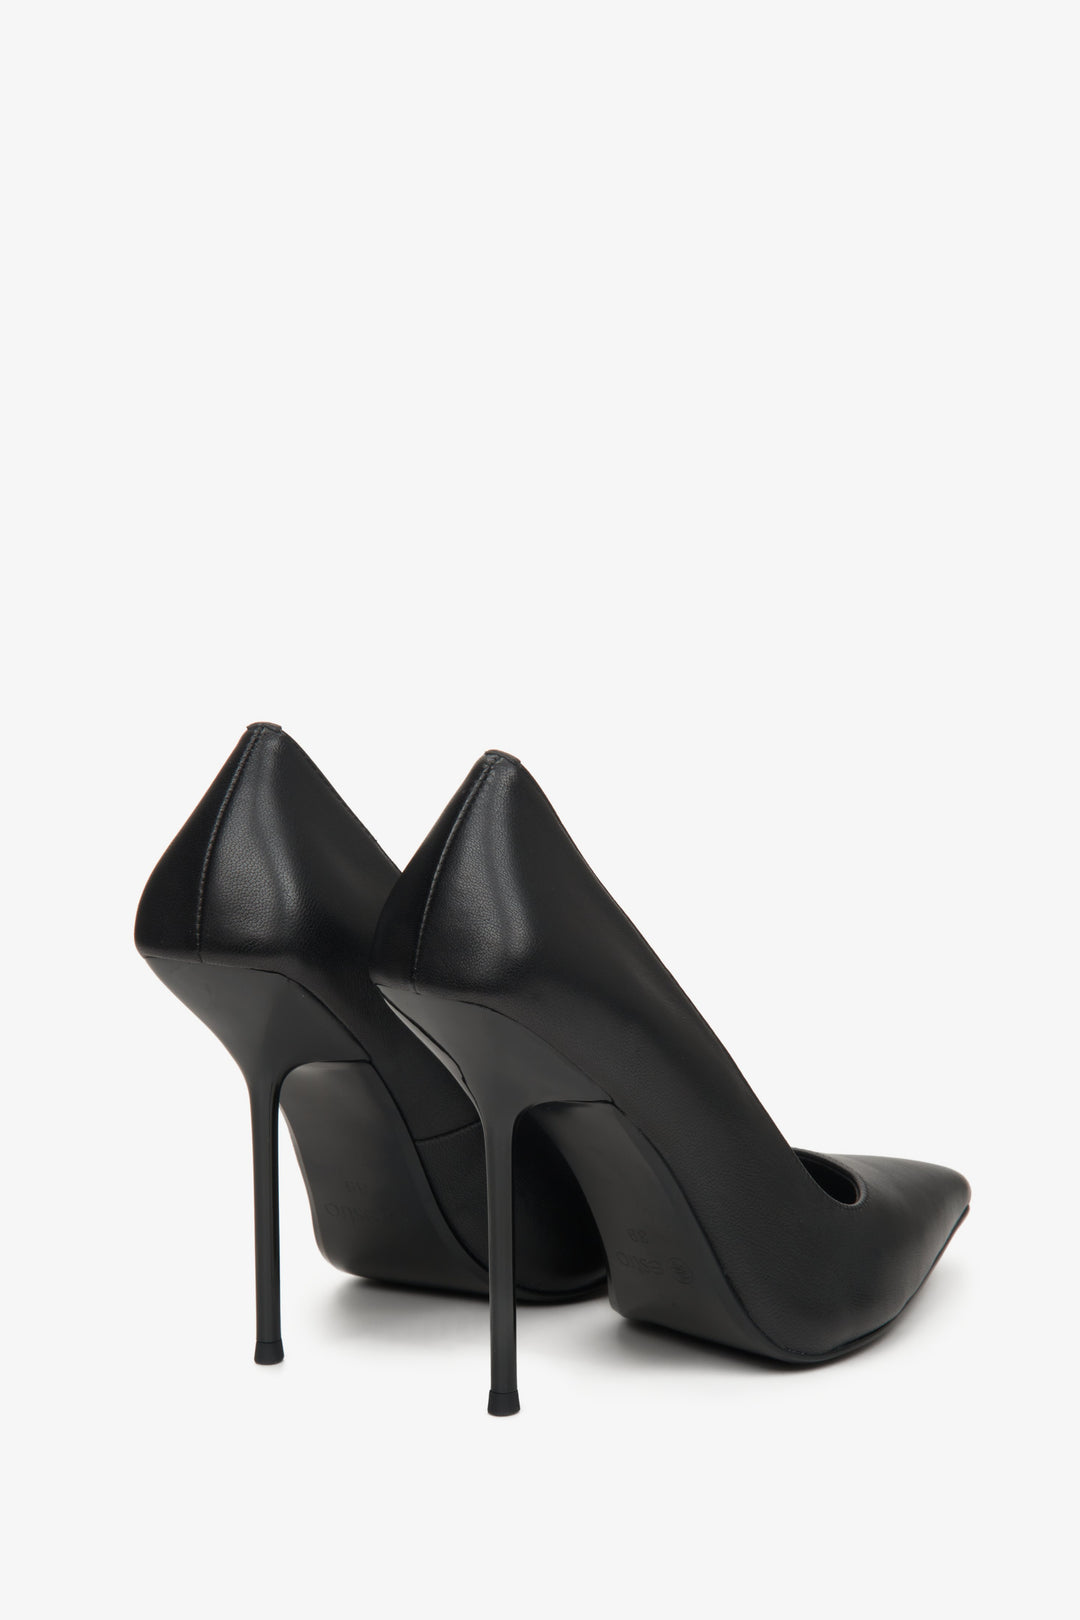 Estro's women's black high-heeled pumps - close-up on the shoe's heel.